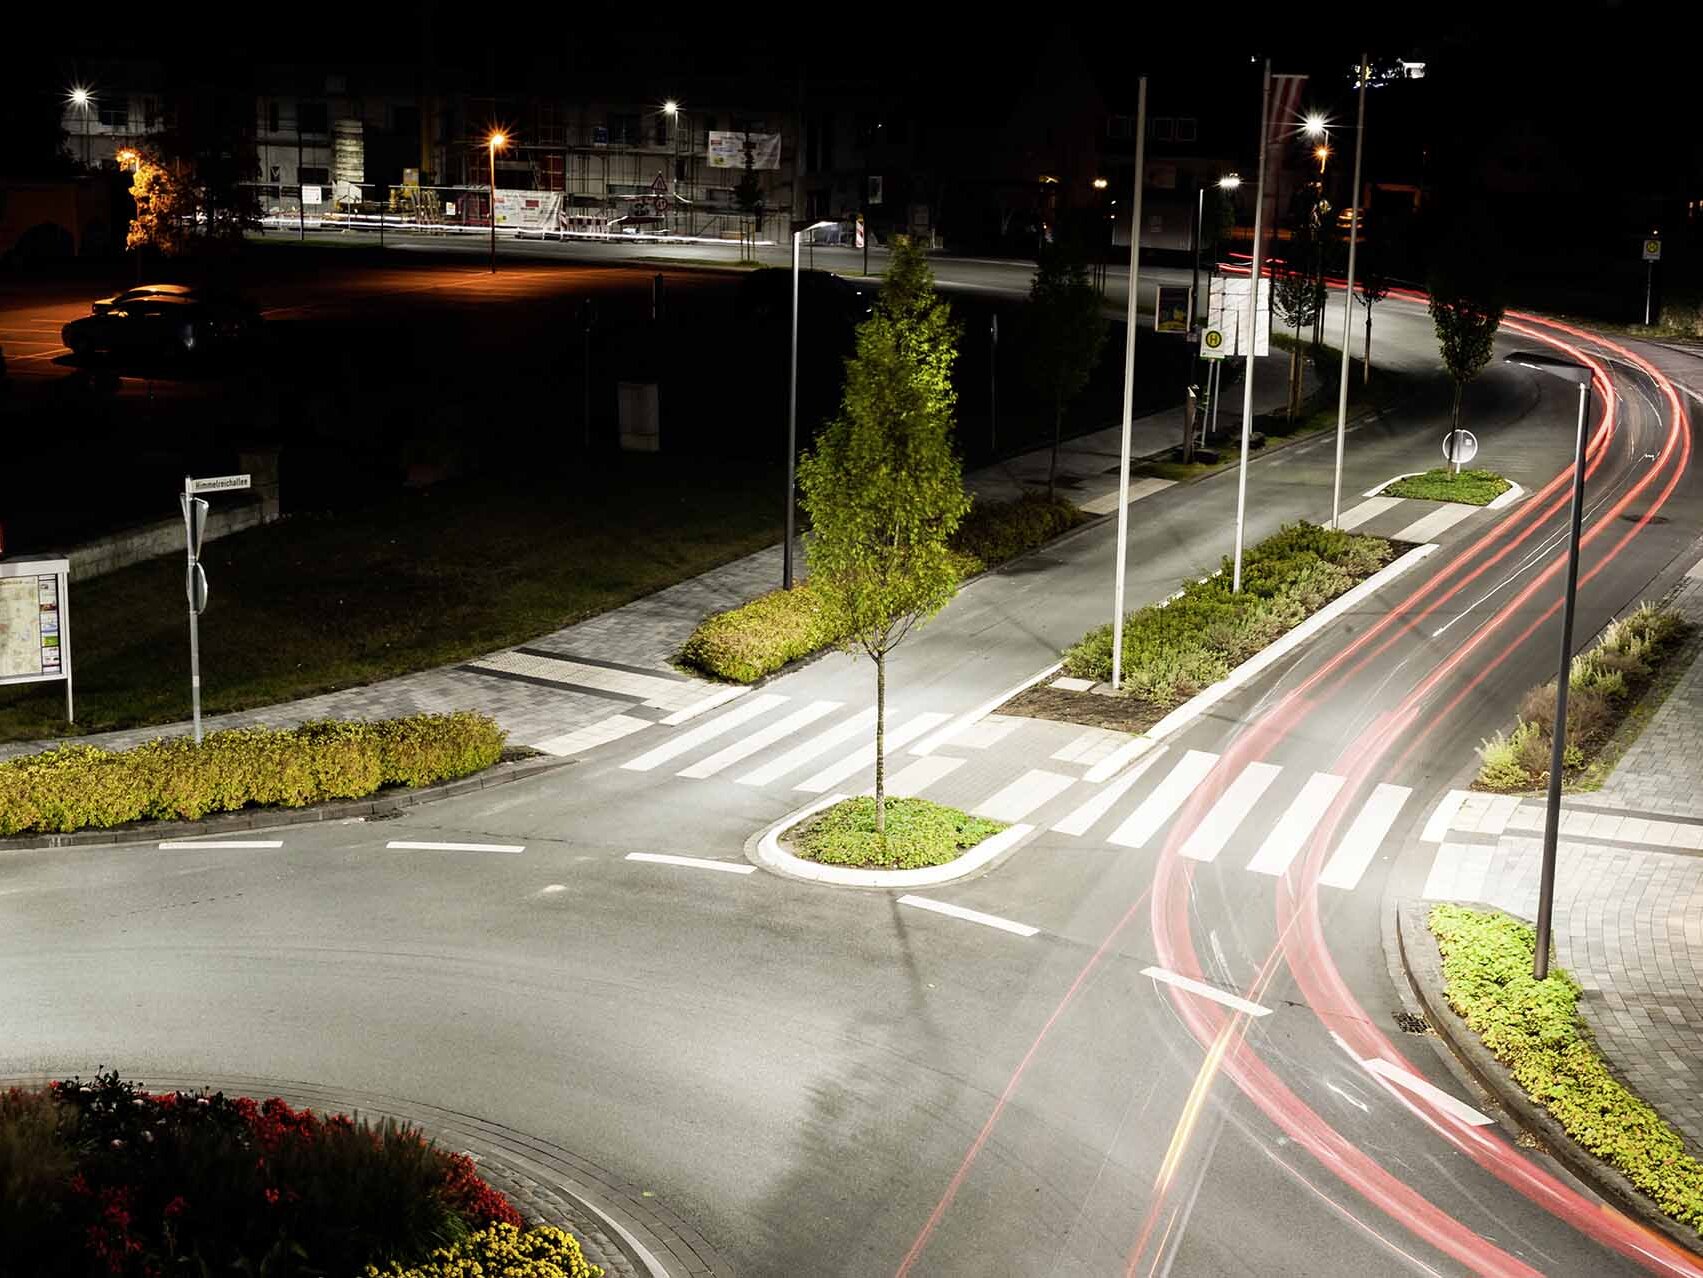 Kreuzung mit Straßenbeleuchtung bei Nacht